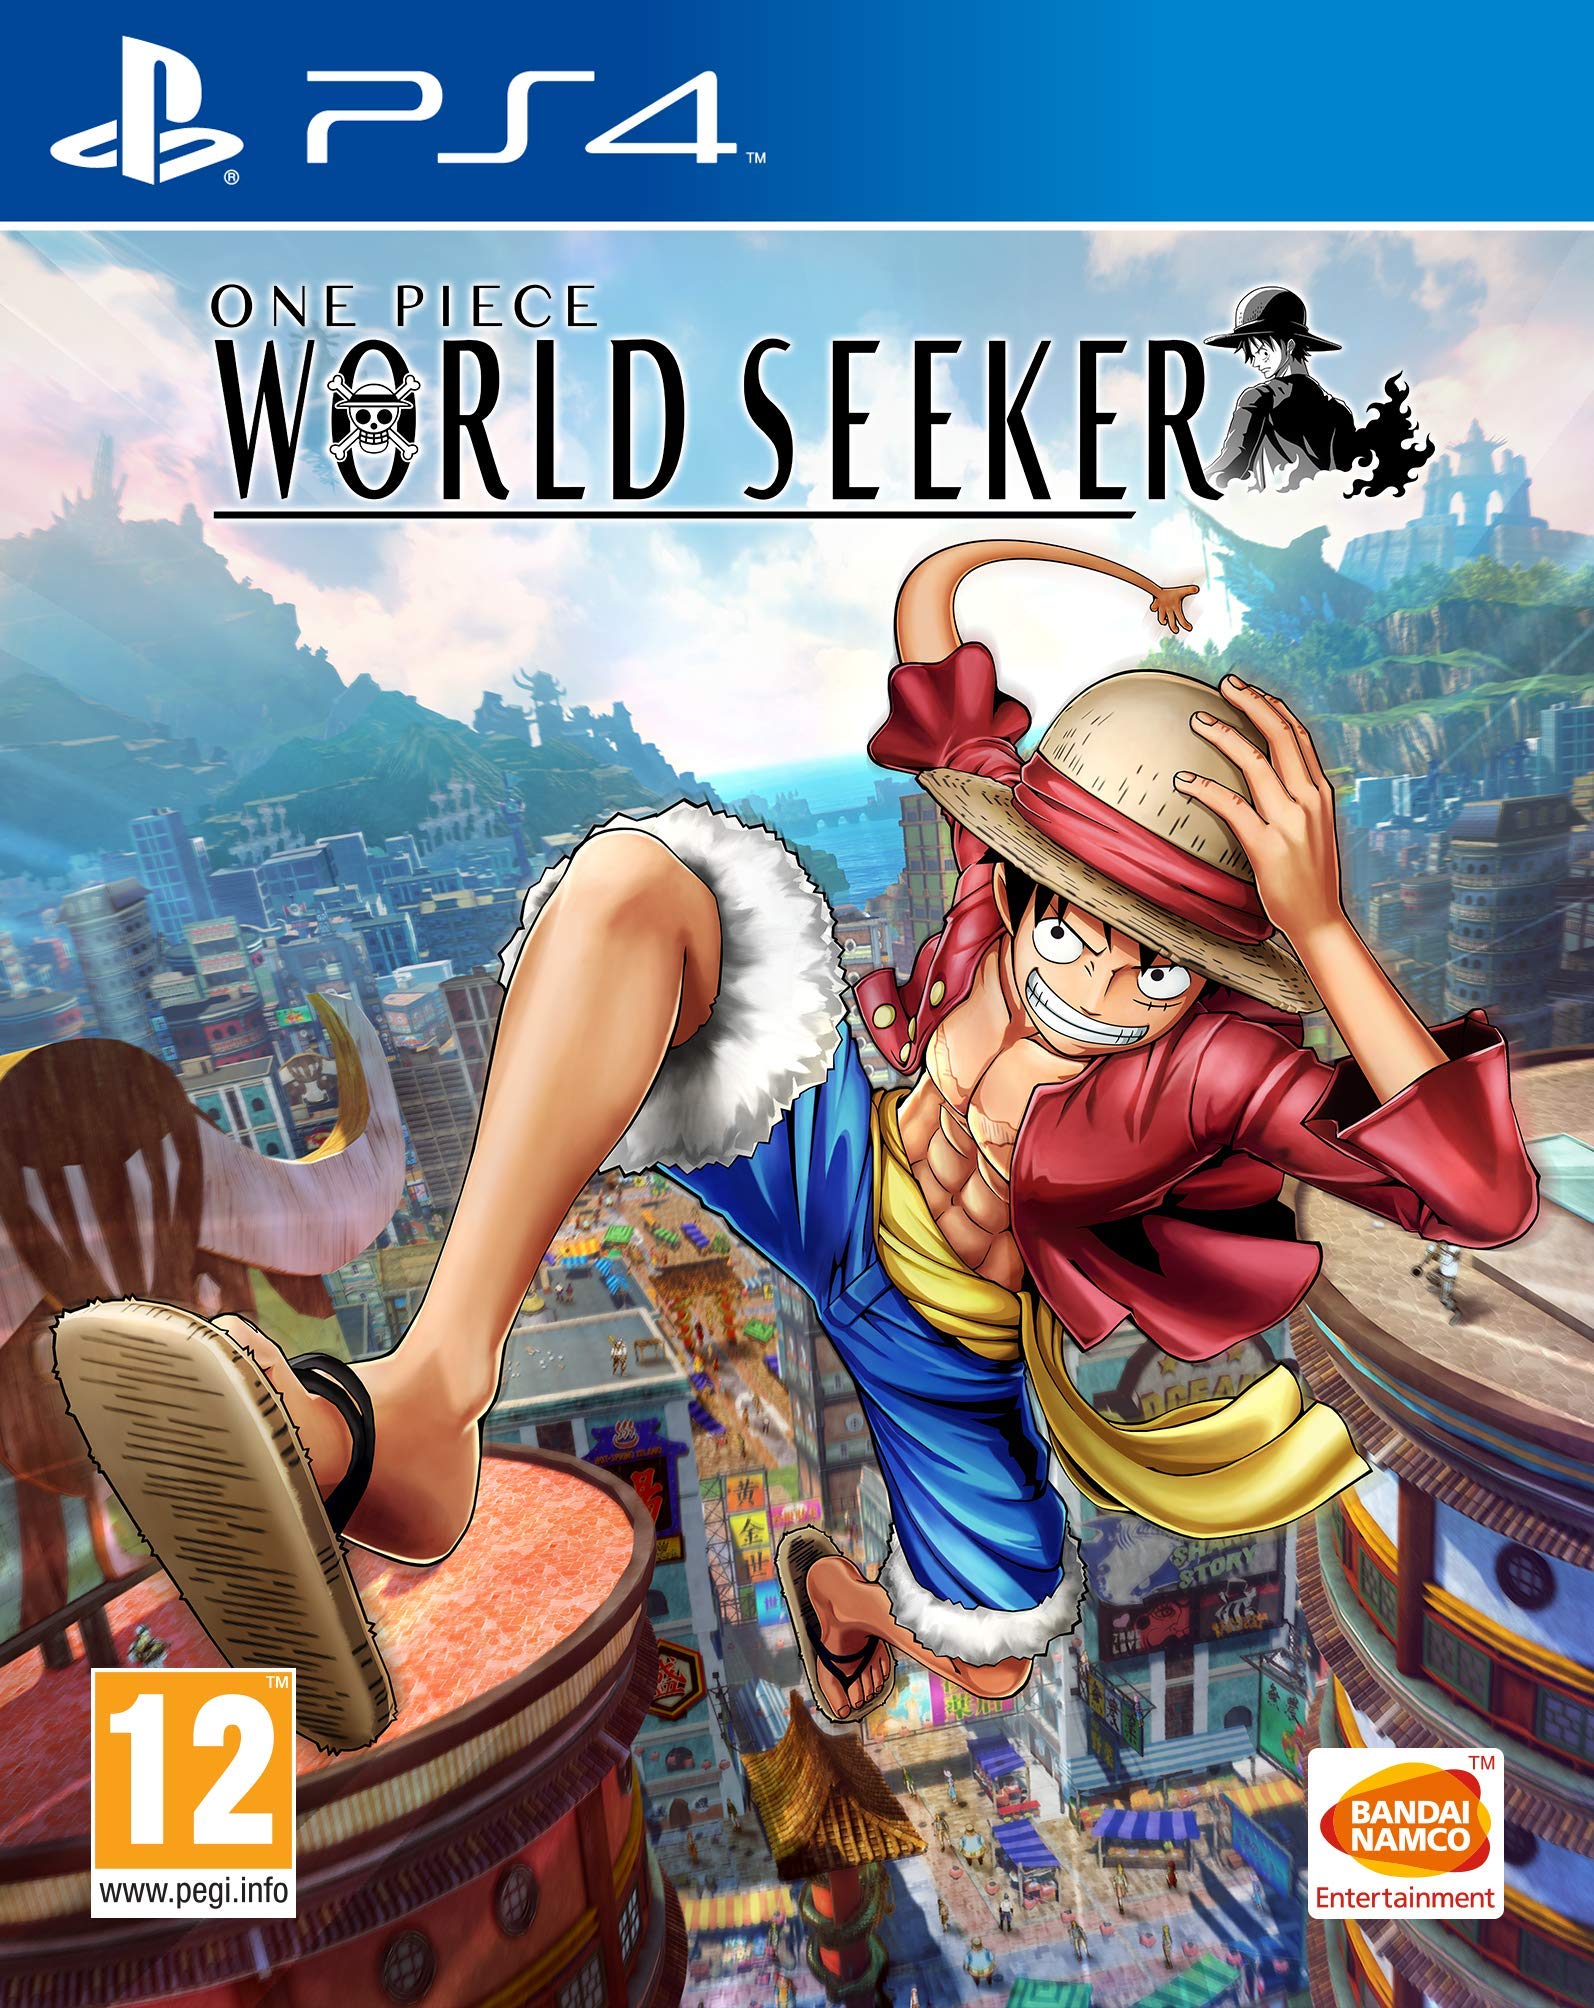 Ps4:One Piece World Seeker PAL - Level UpBandai NamcoPlaystation Video Games722674121217